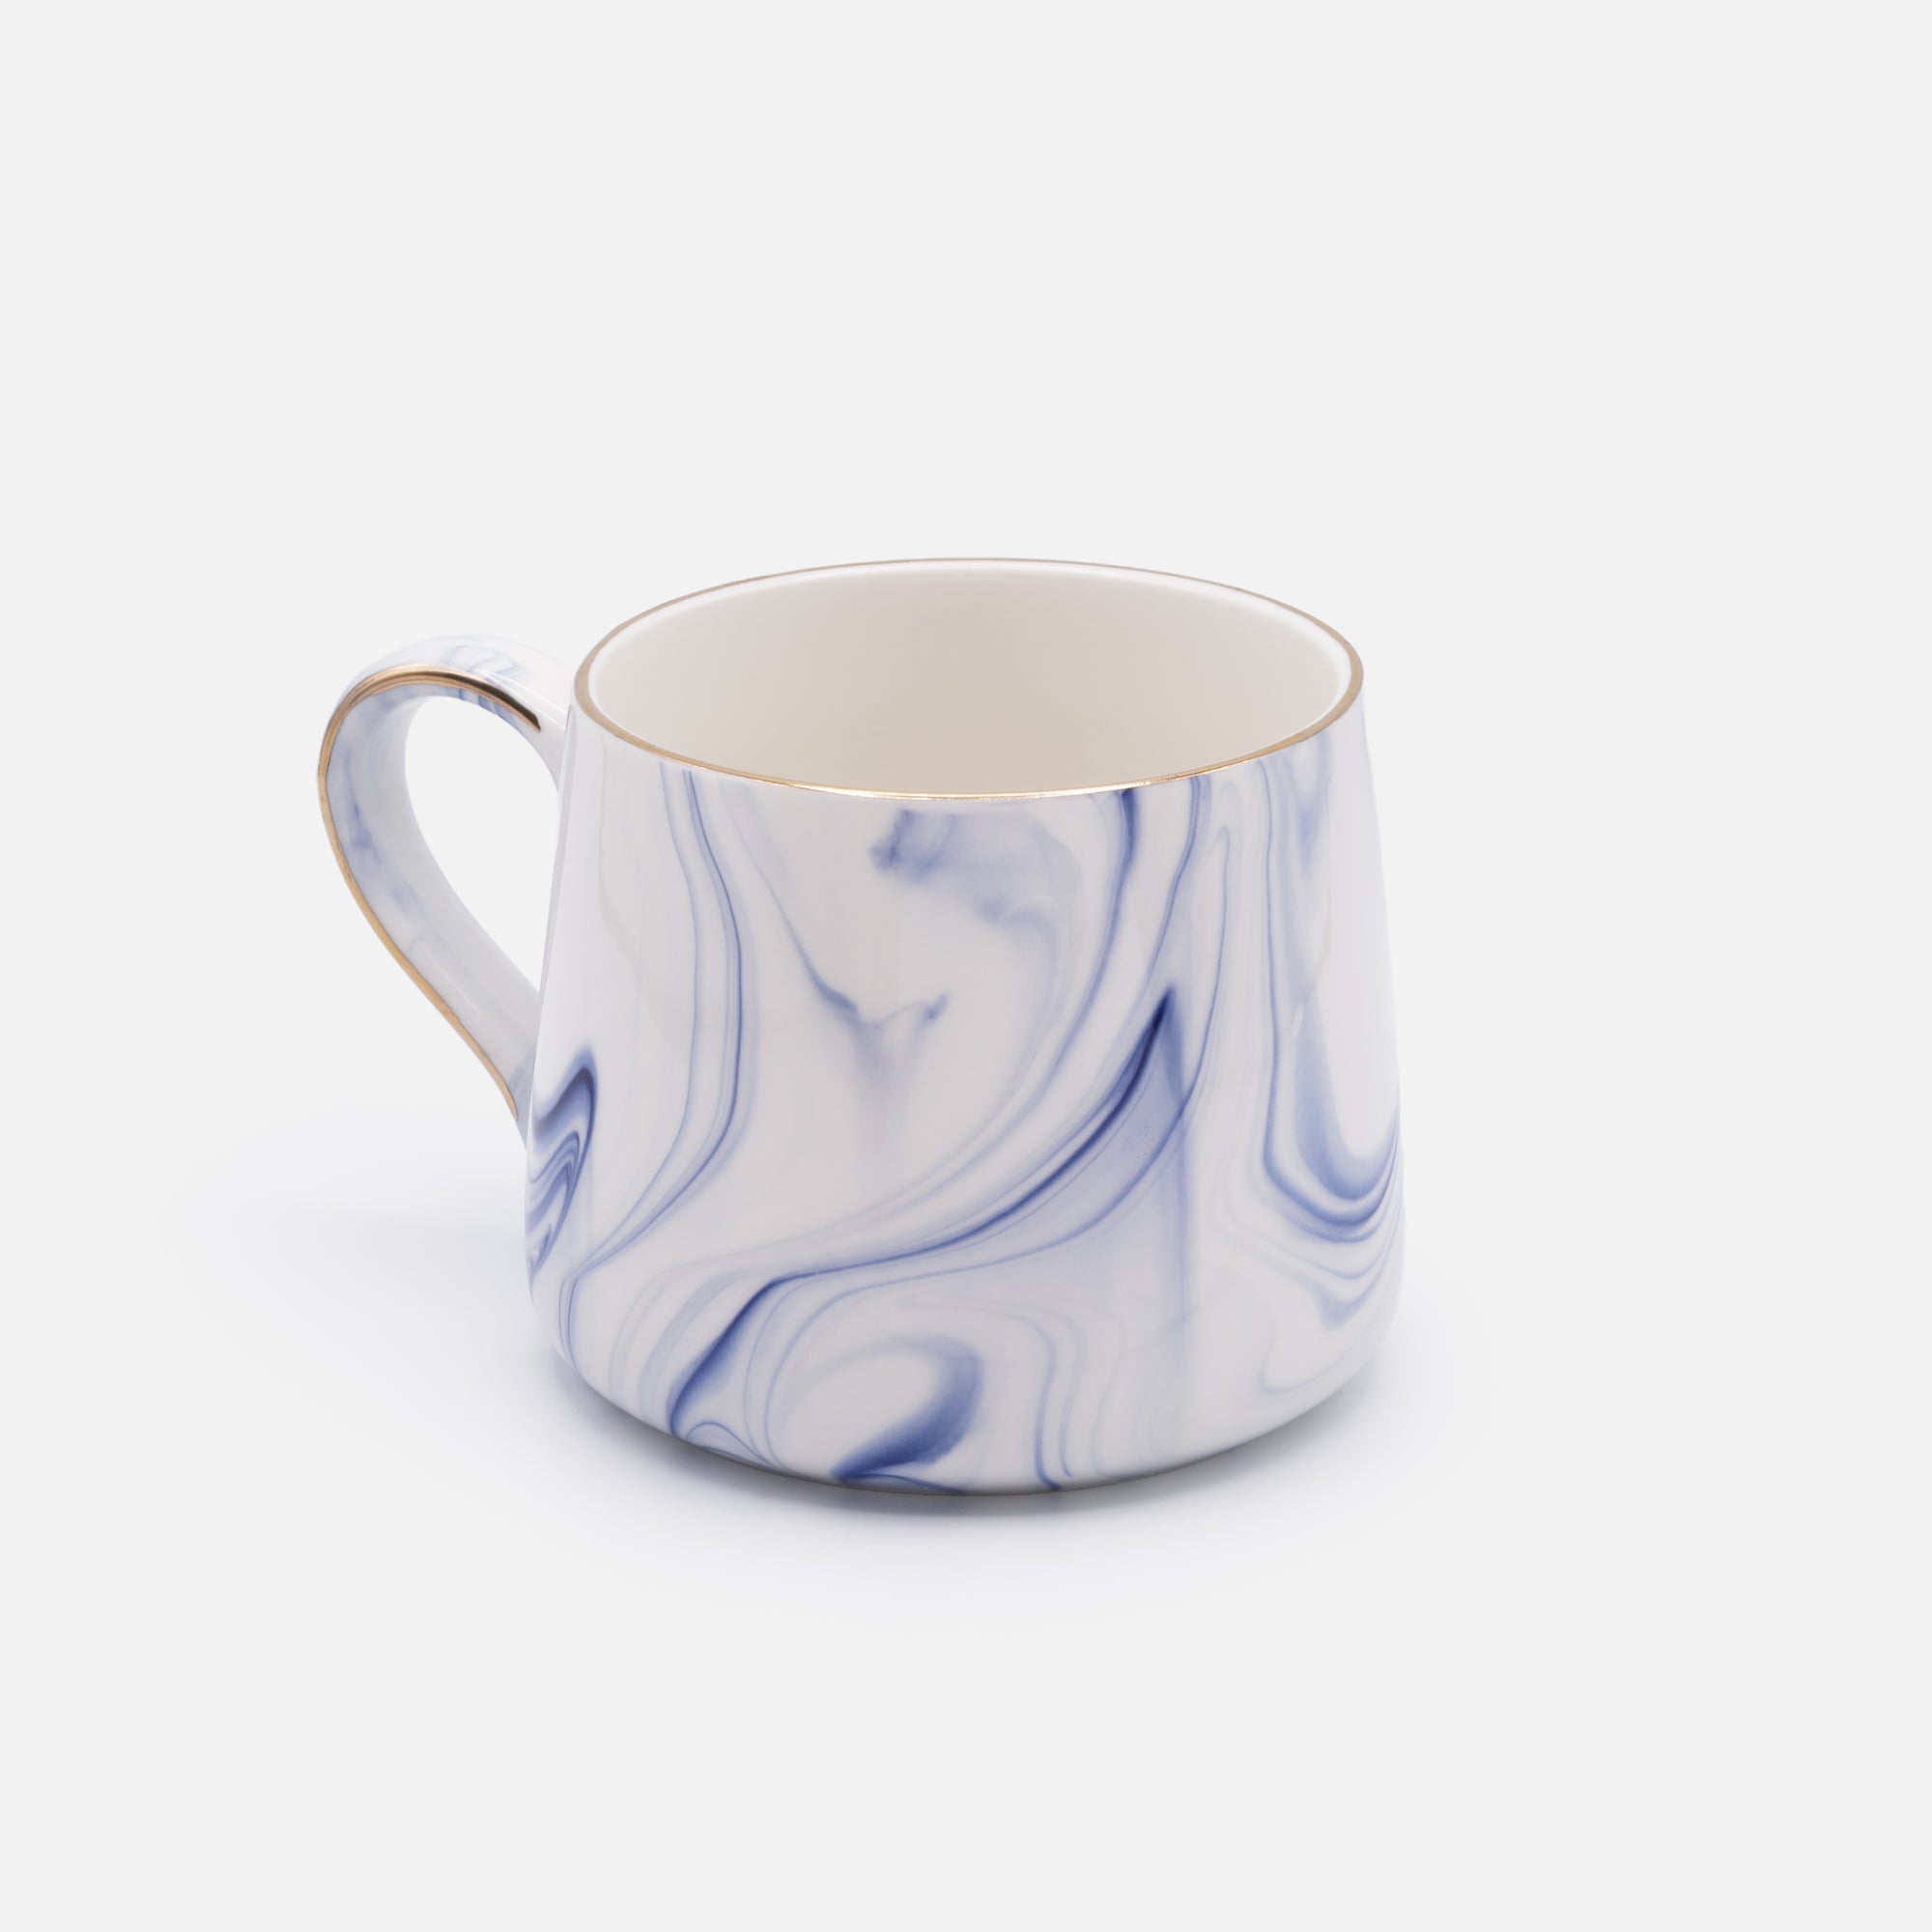 White ceramic mug with blue marbling